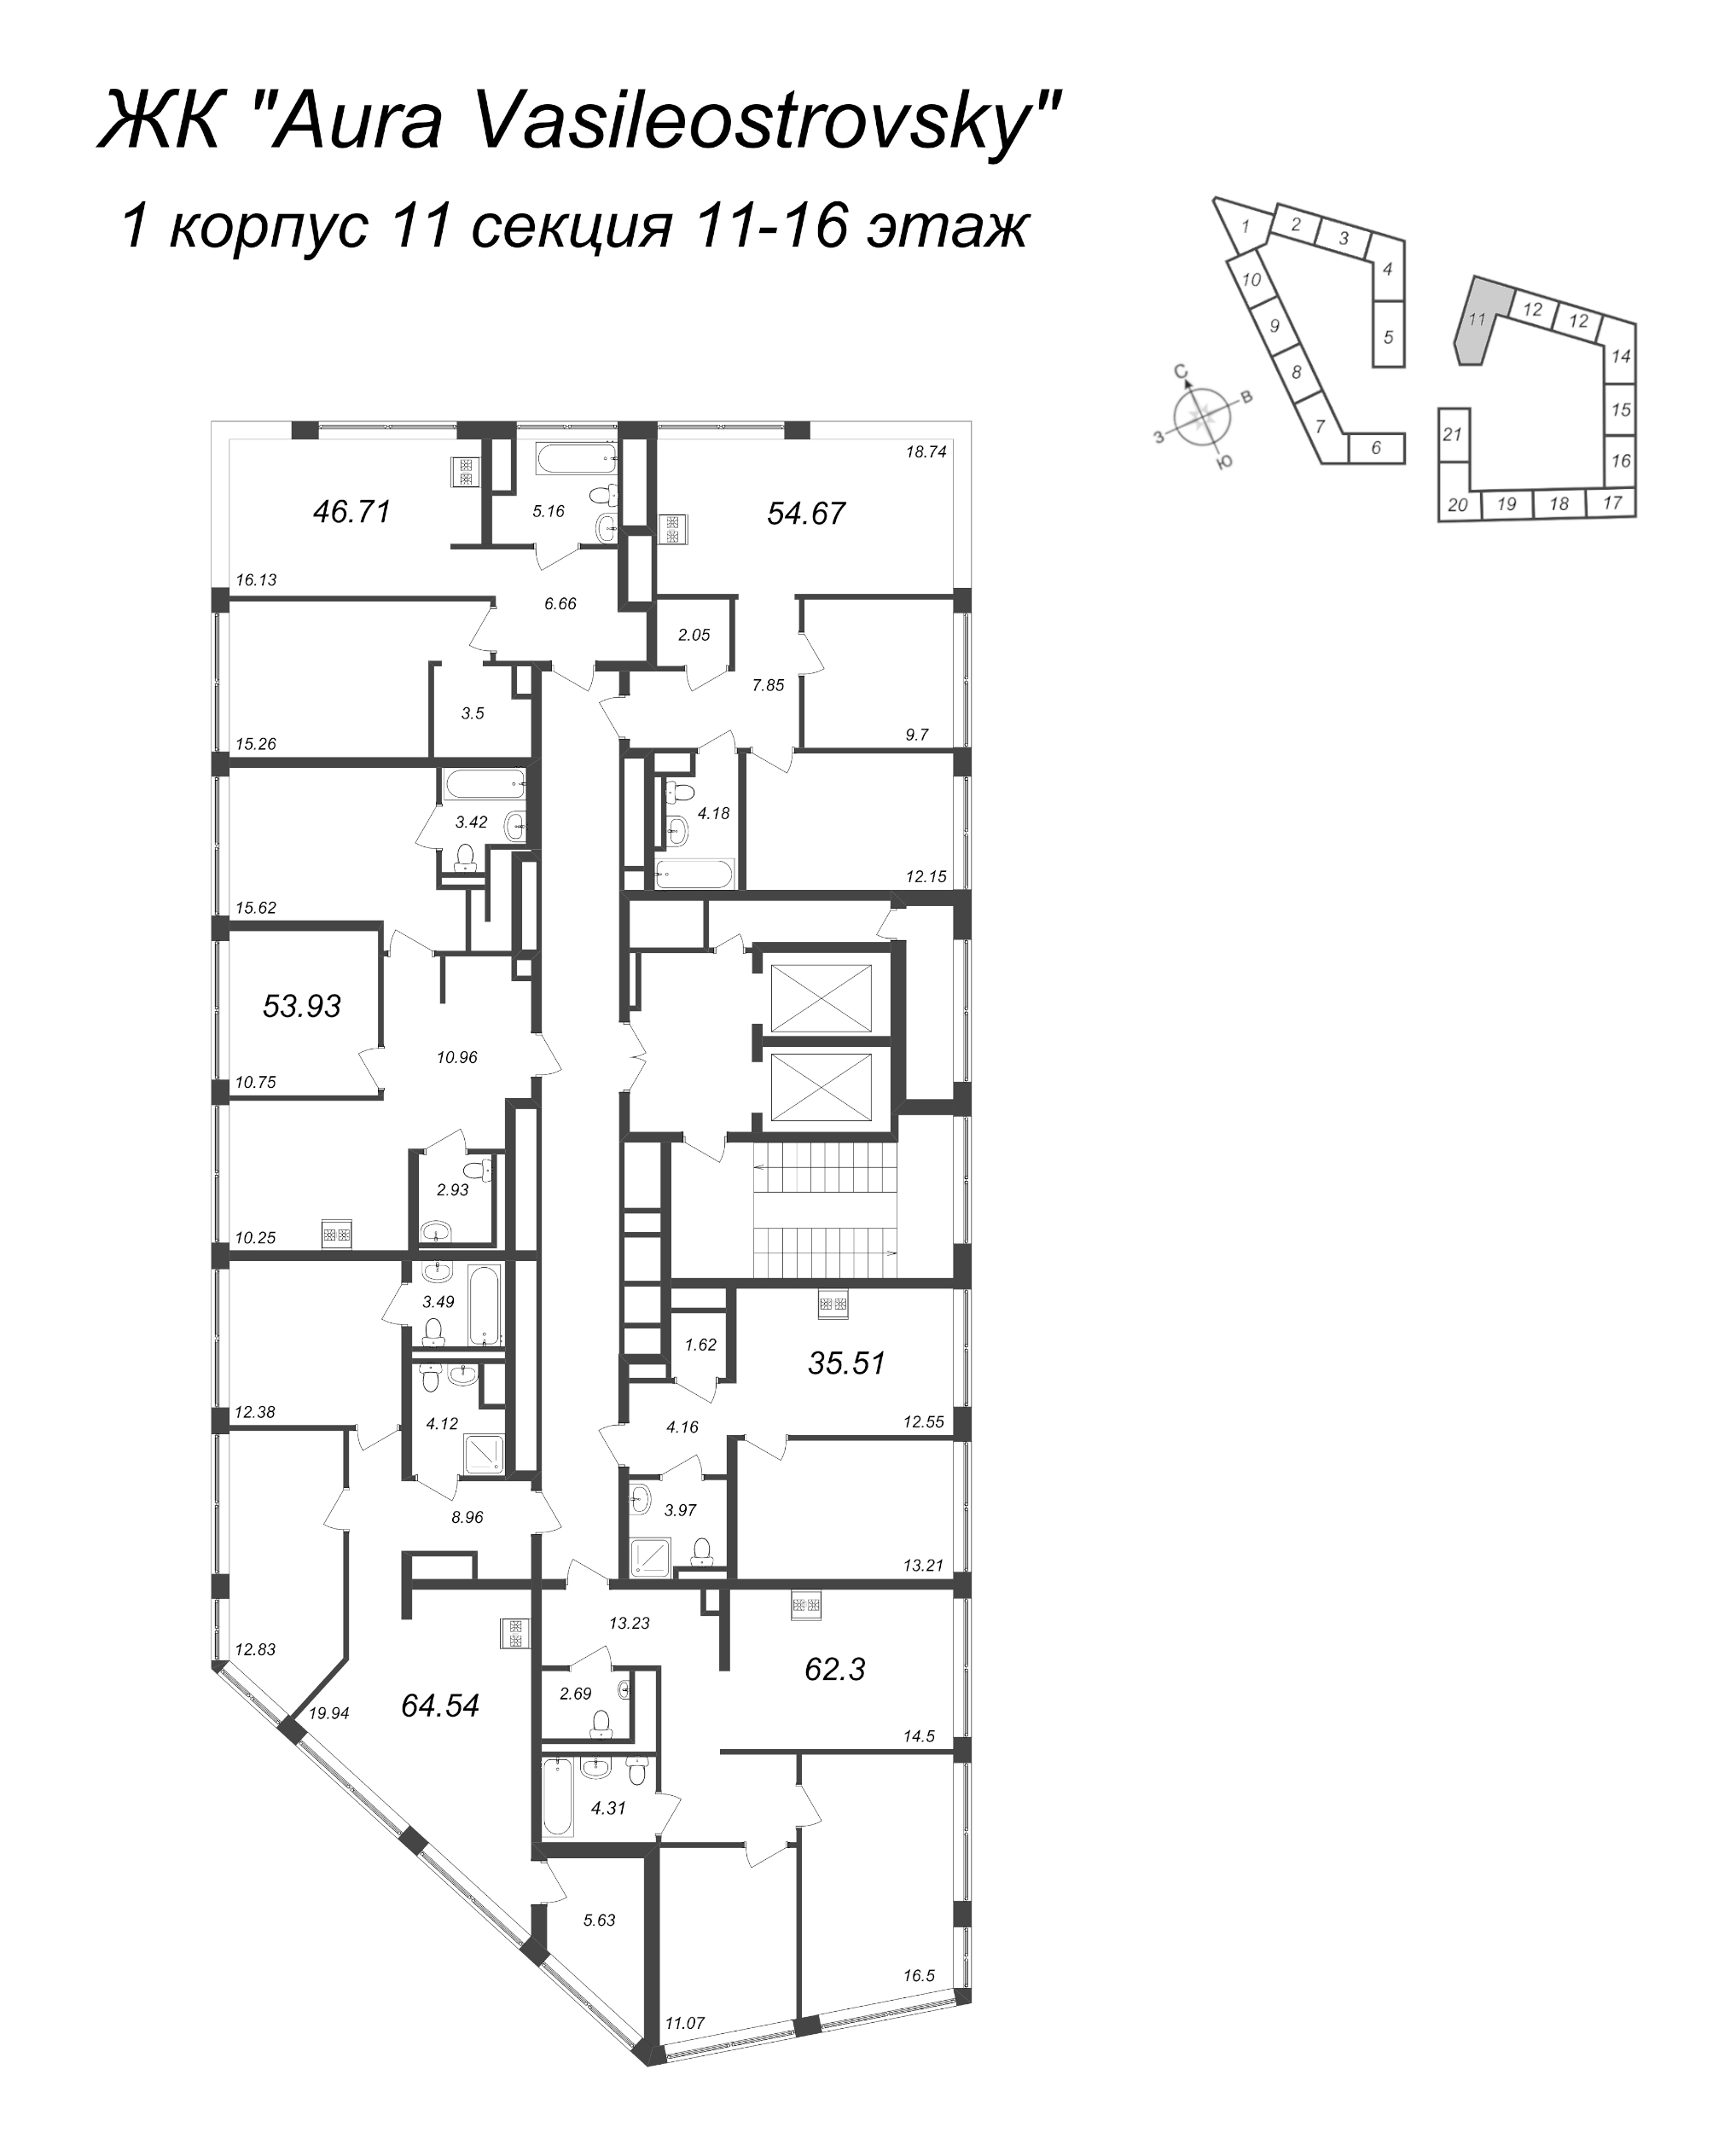 3-комнатная (Евро) квартира, 64.54 м² - планировка этажа